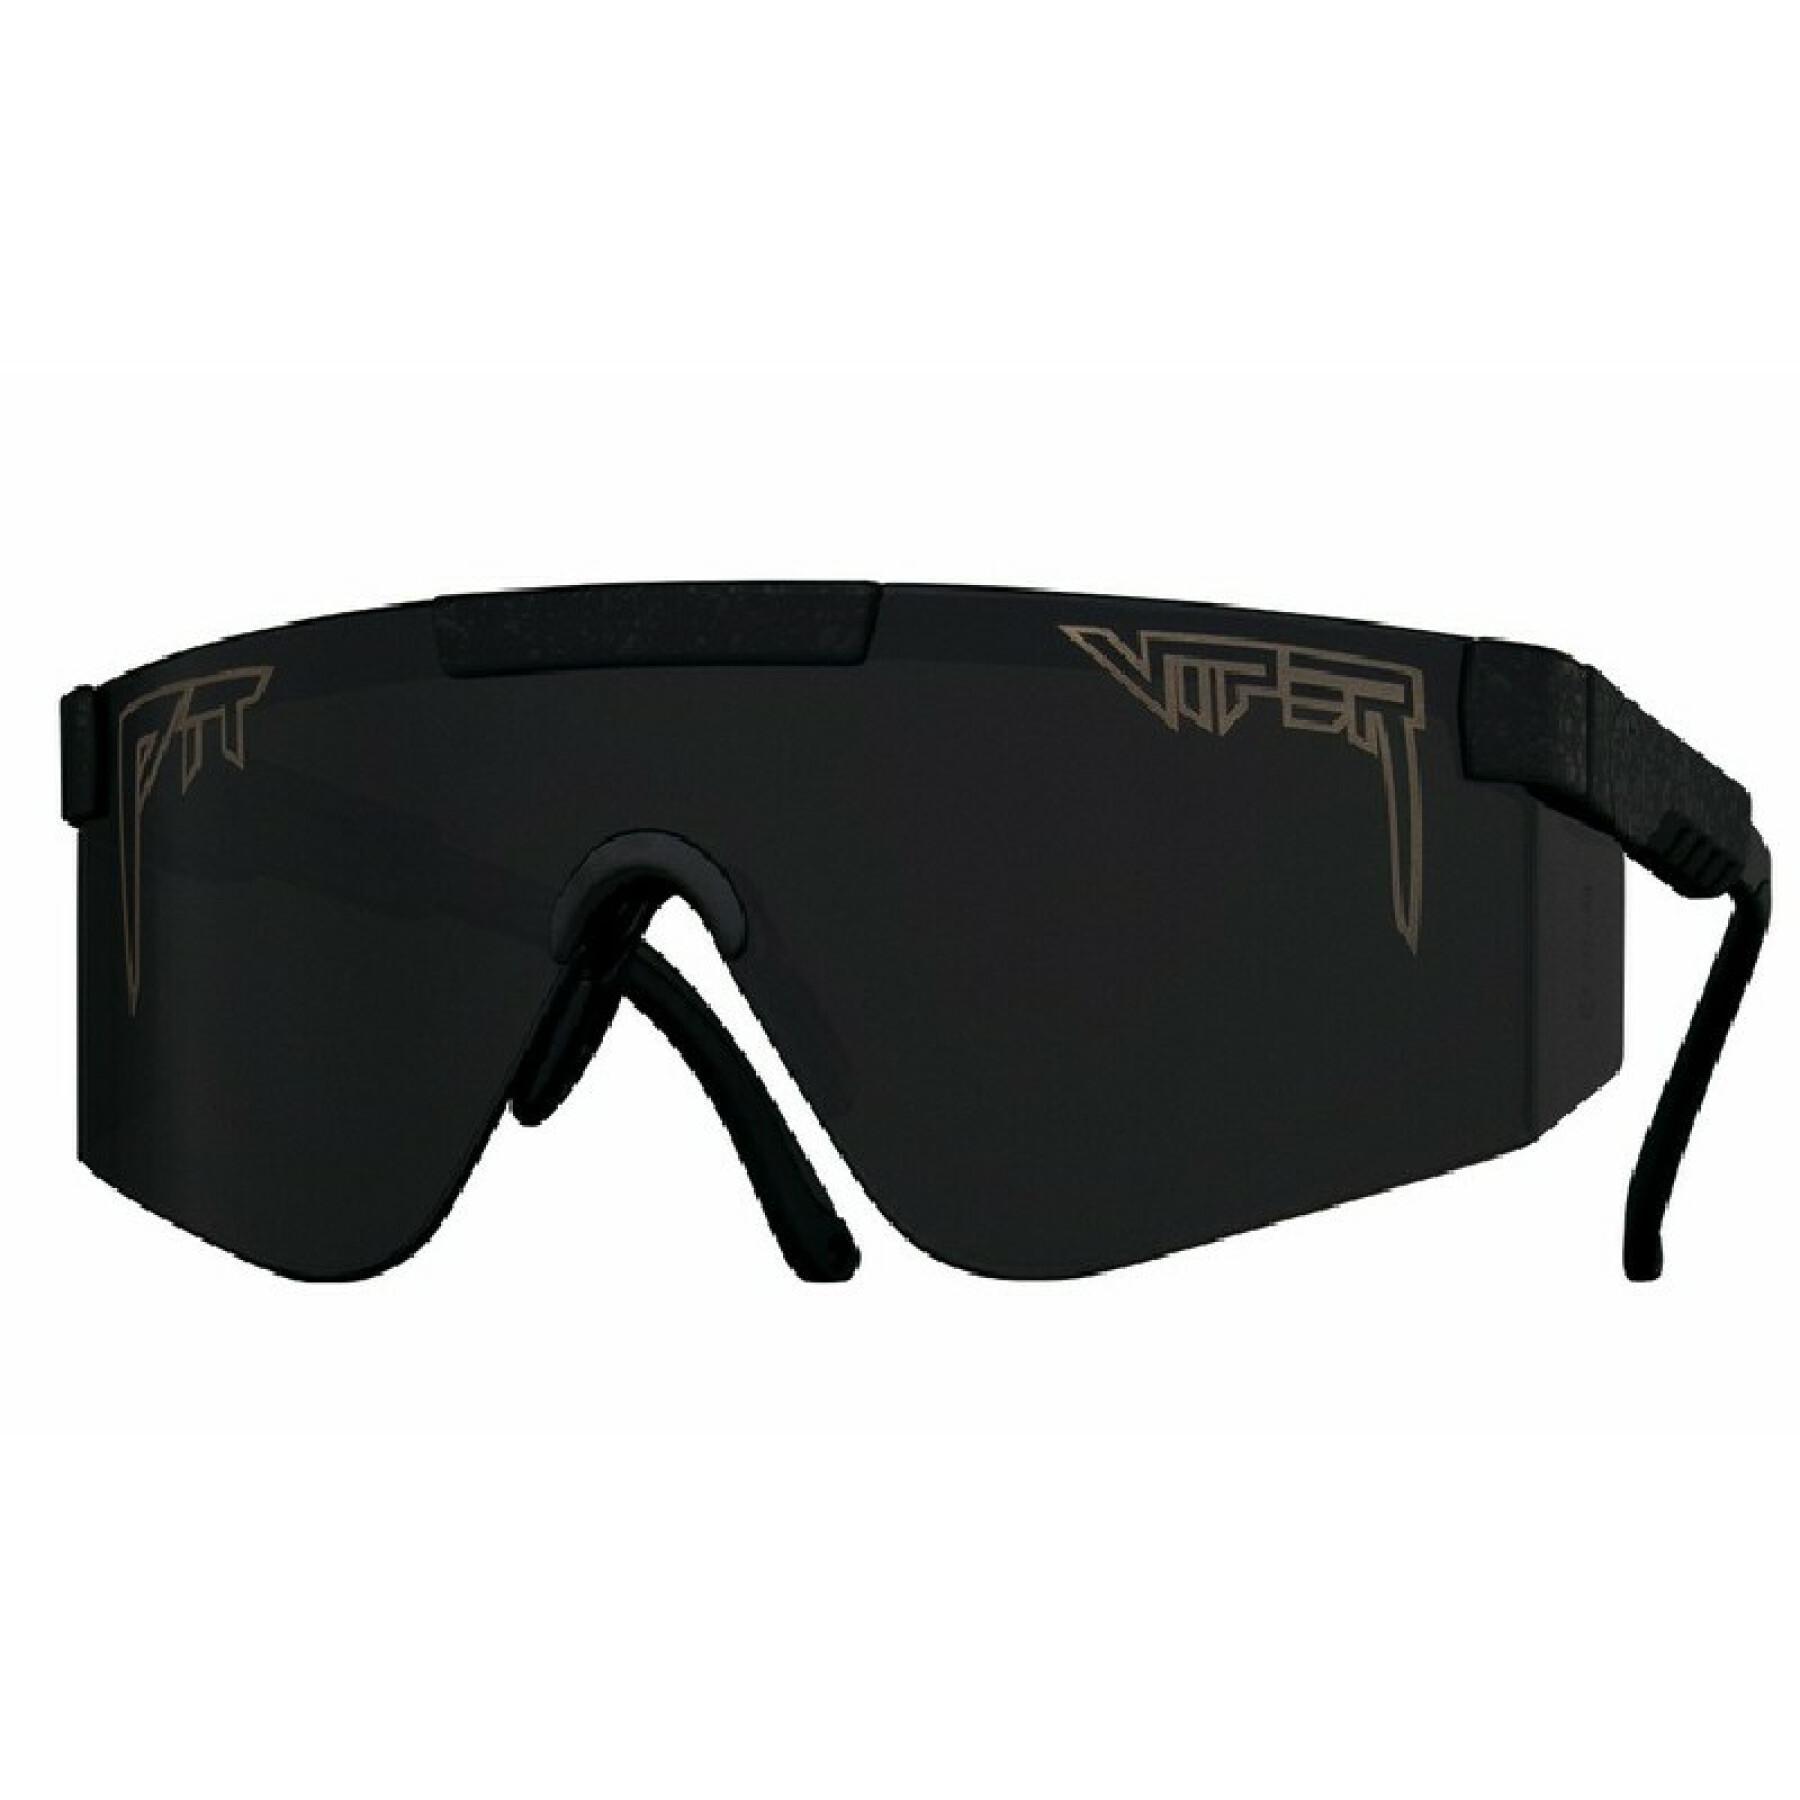 Sunglasses Pit Viper The Black OPS 2000 mil-spec